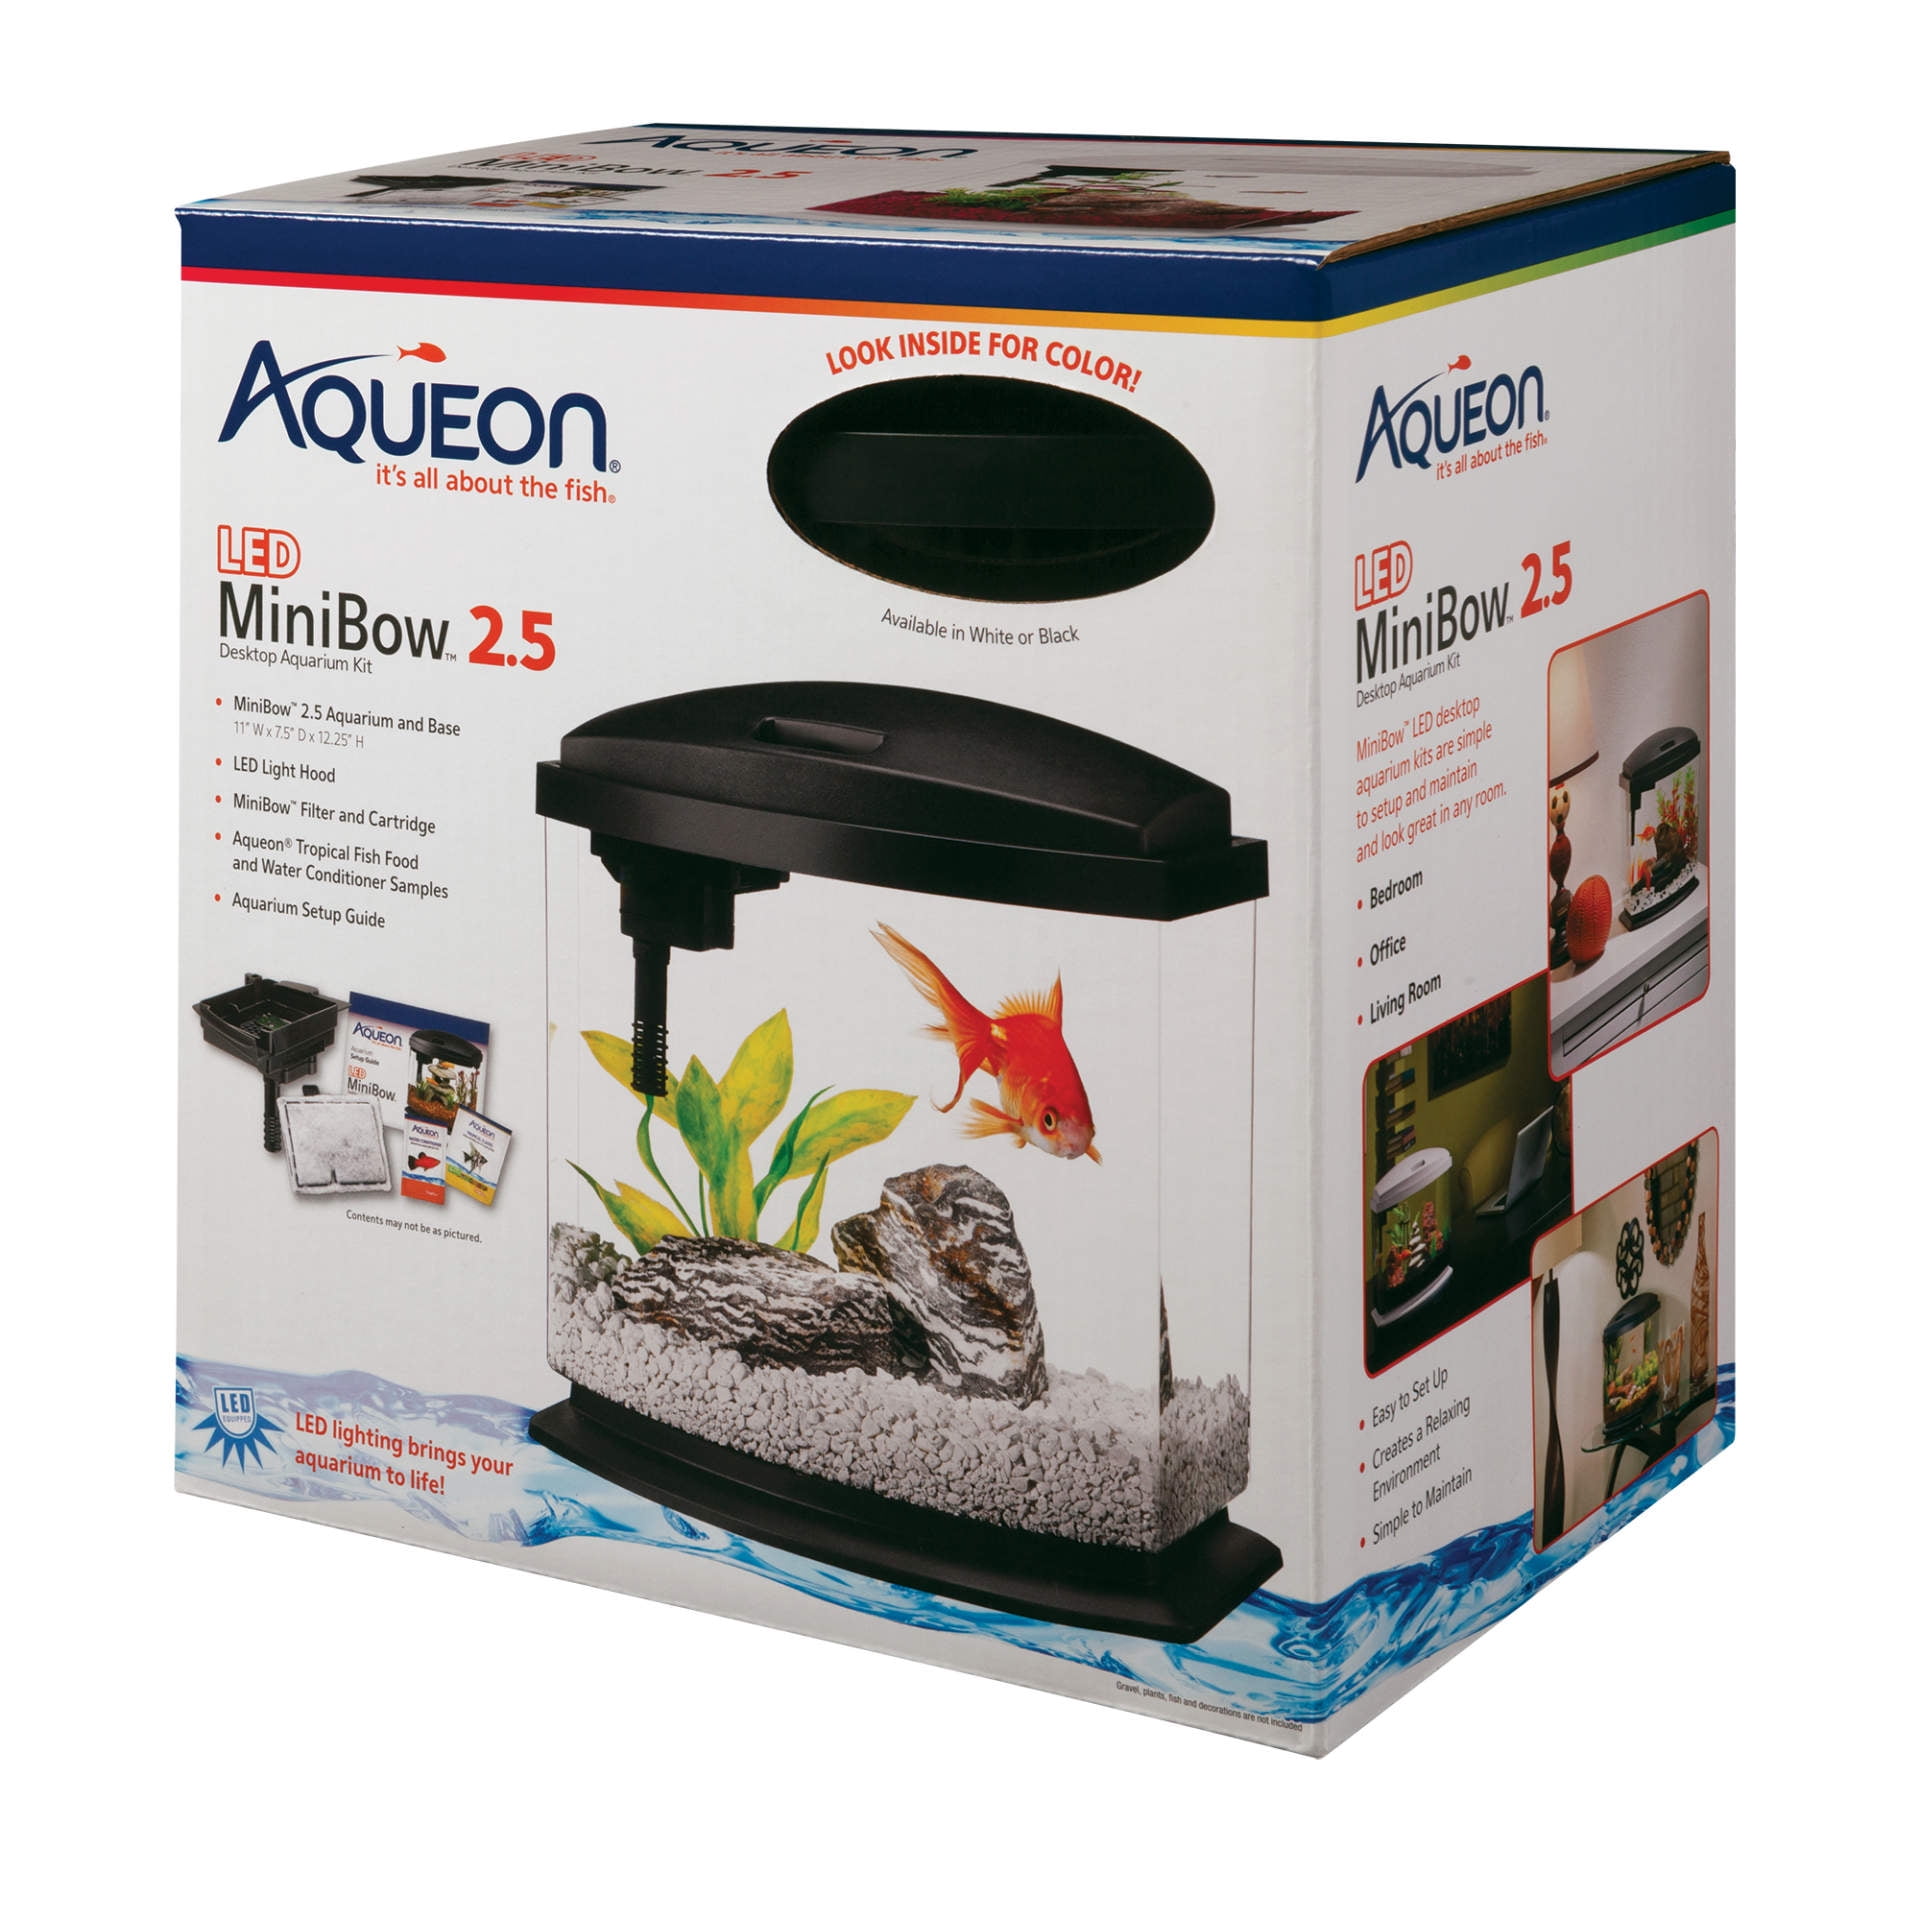 Aqueon LED MiniBow Aquarium Starter Kits with LED Lighting 